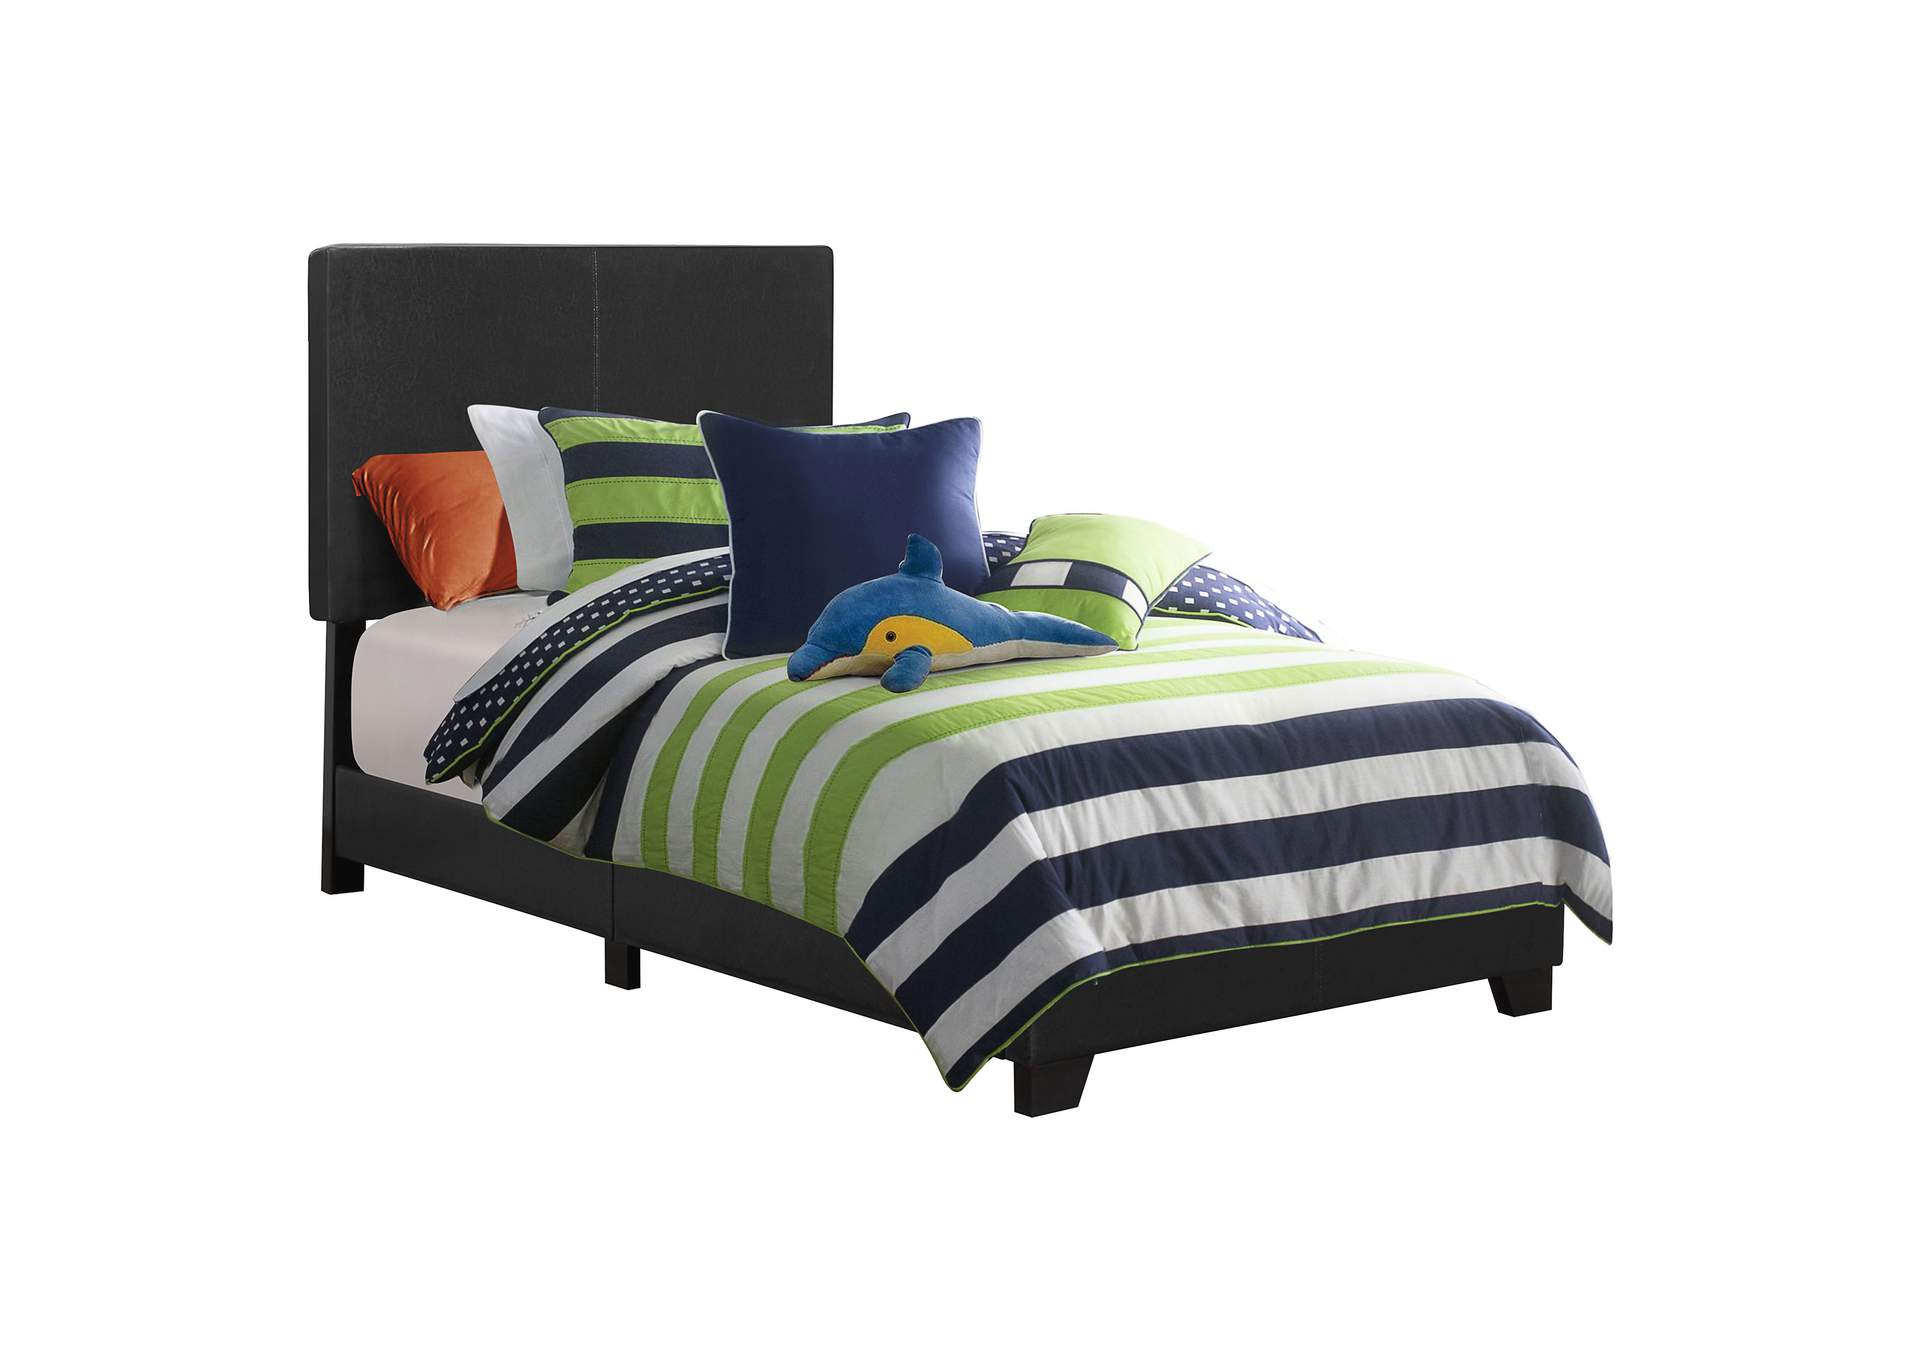 Dorian Upholstered Twin Bed Black,Coaster Furniture